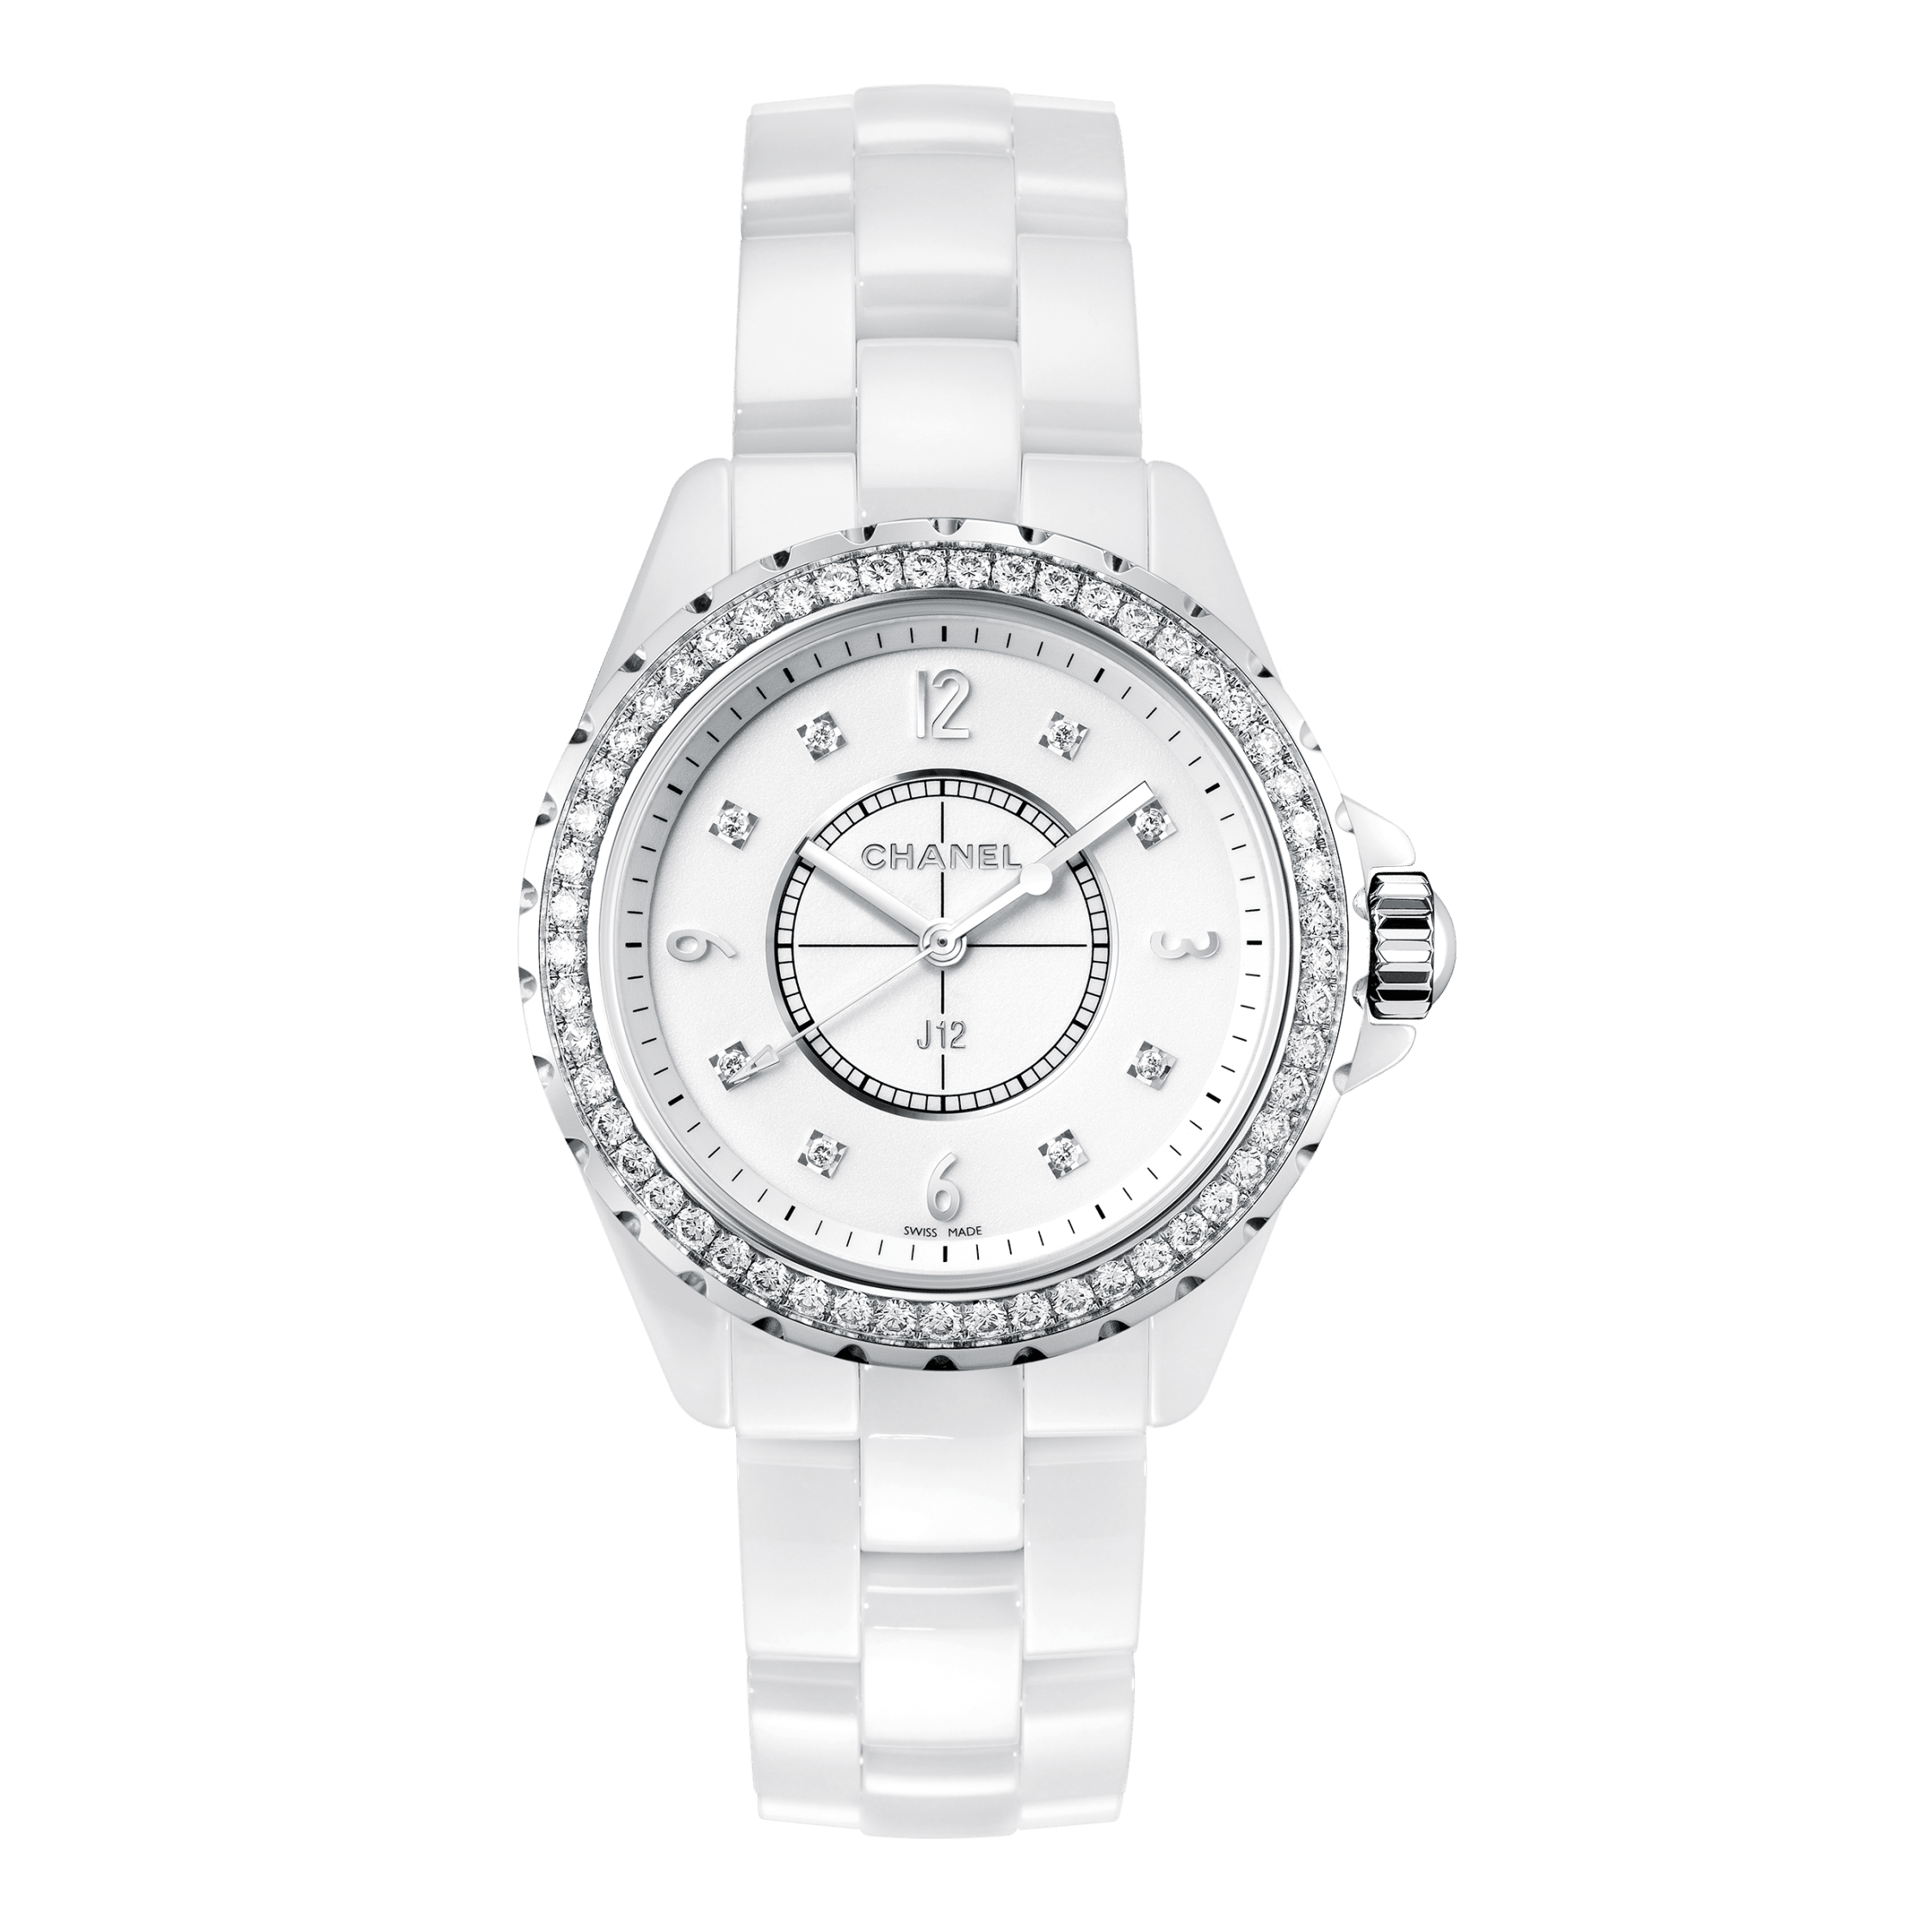 Đồng hồ Chanel J12 33mm  likewatchcom